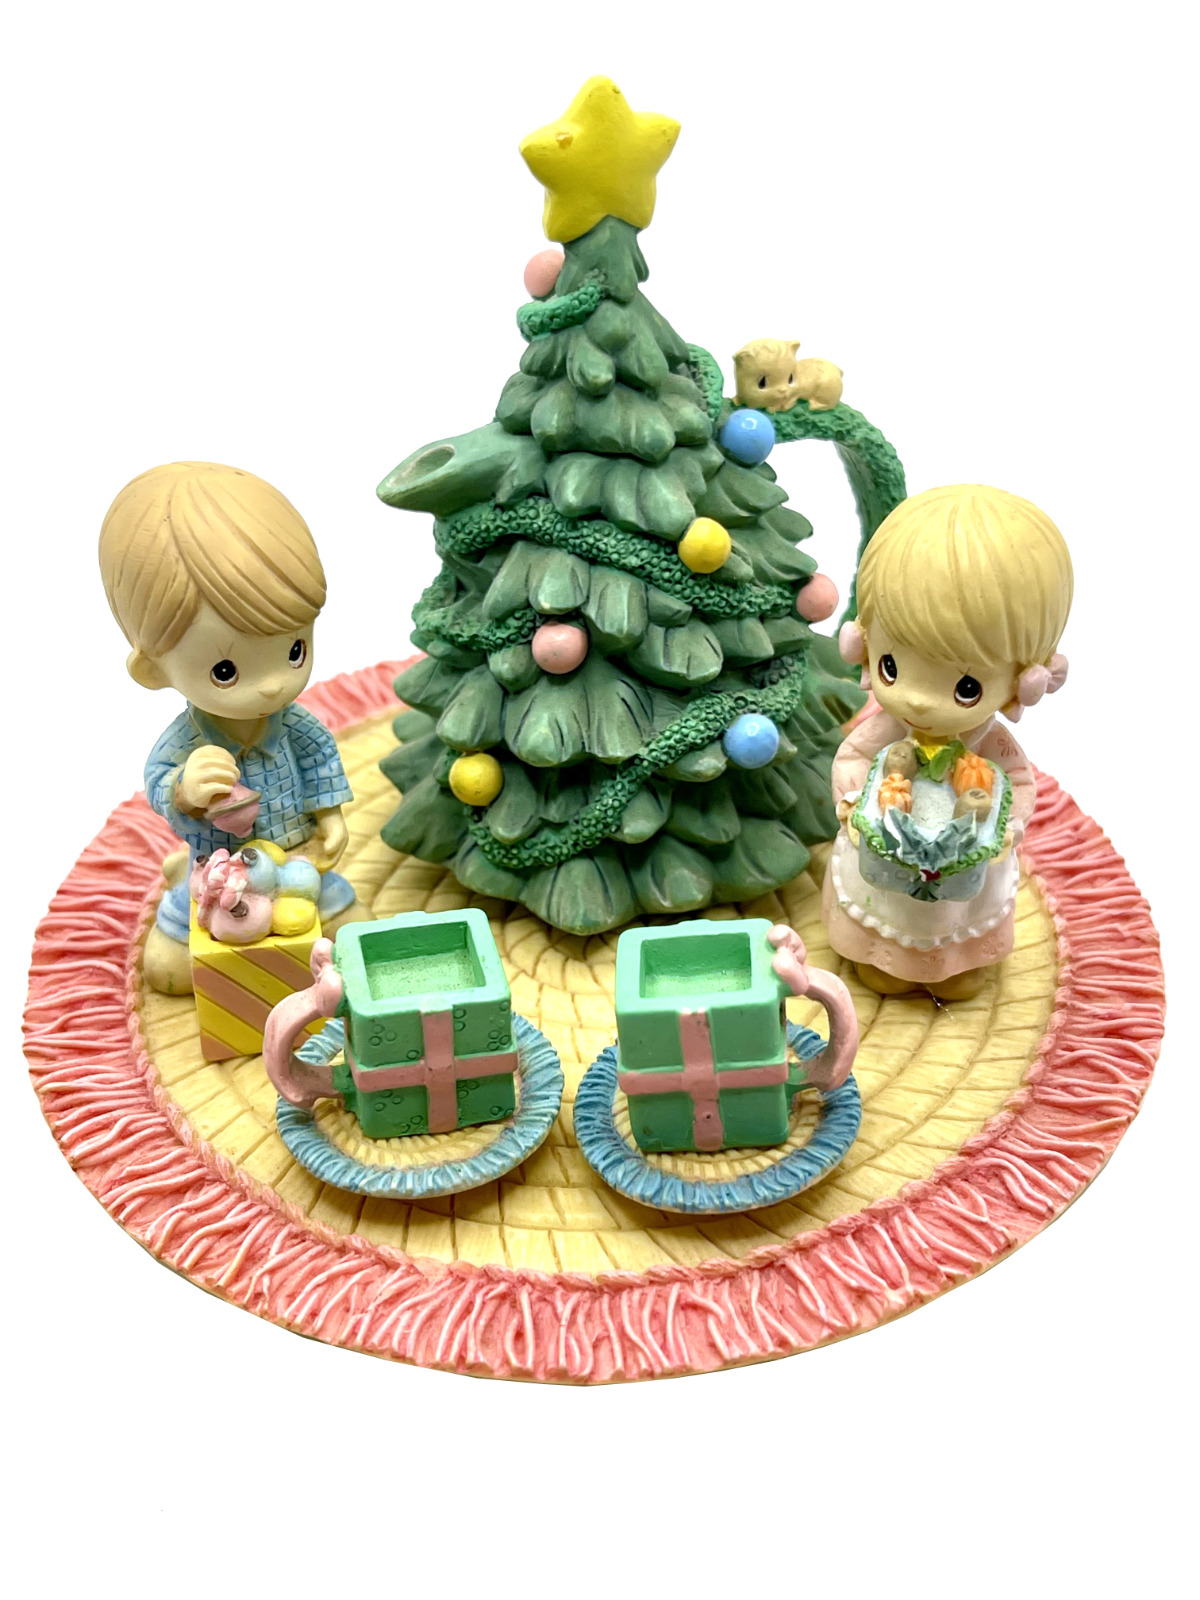 Precious Moments by Enesco Vintage Minature Tea Set - Christmas